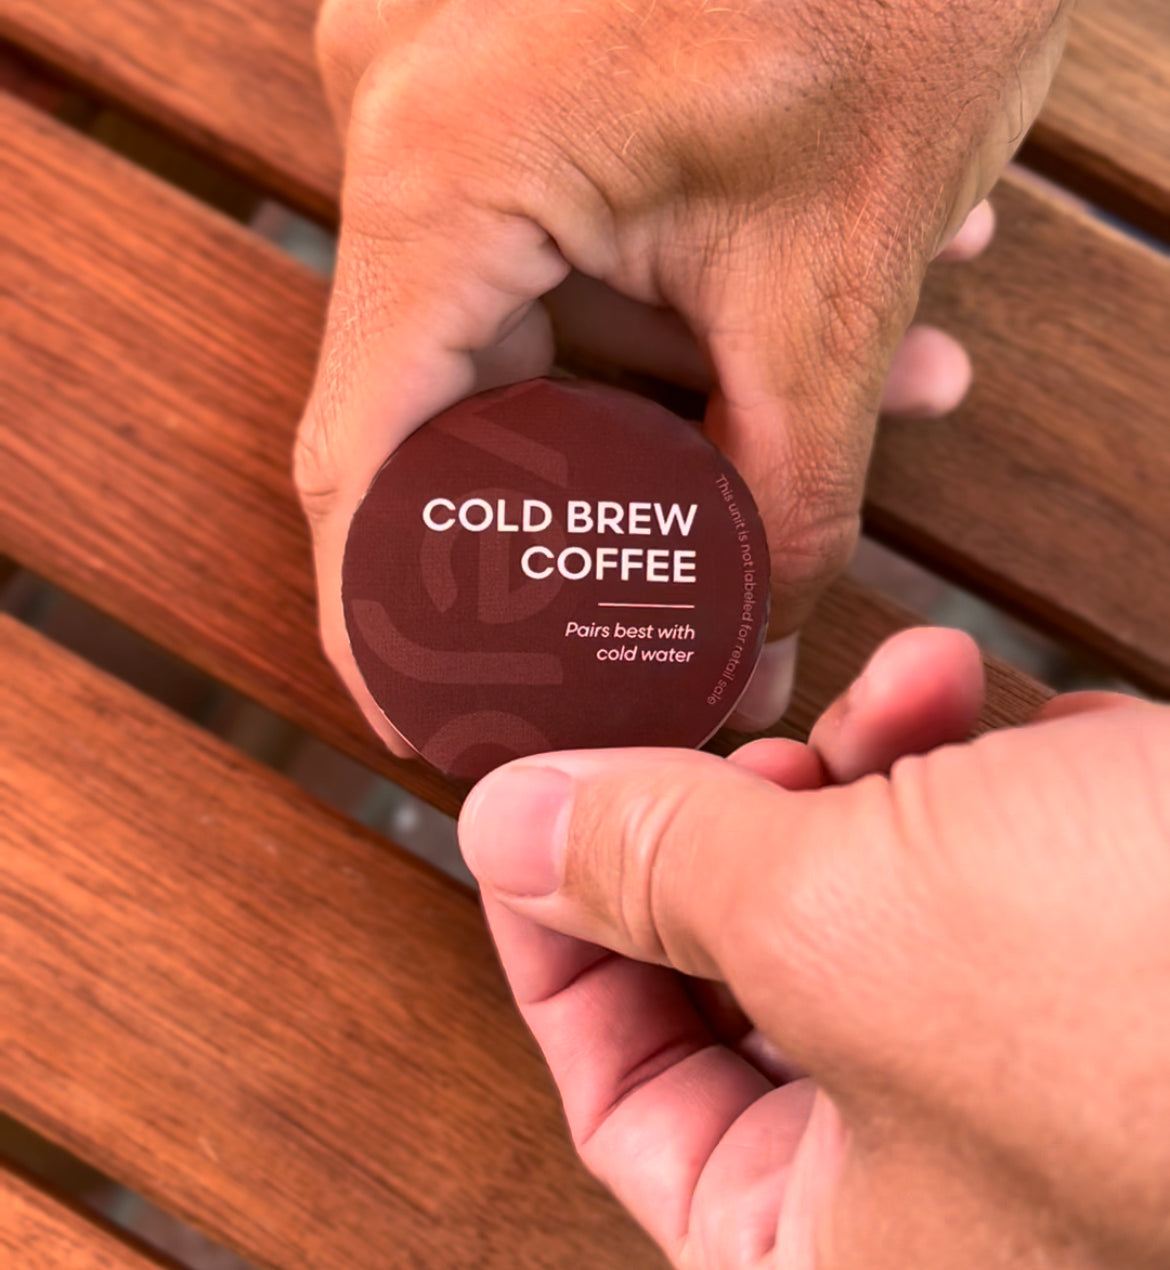 4 Major Benefits to Vejo's Cold Brew Coffee